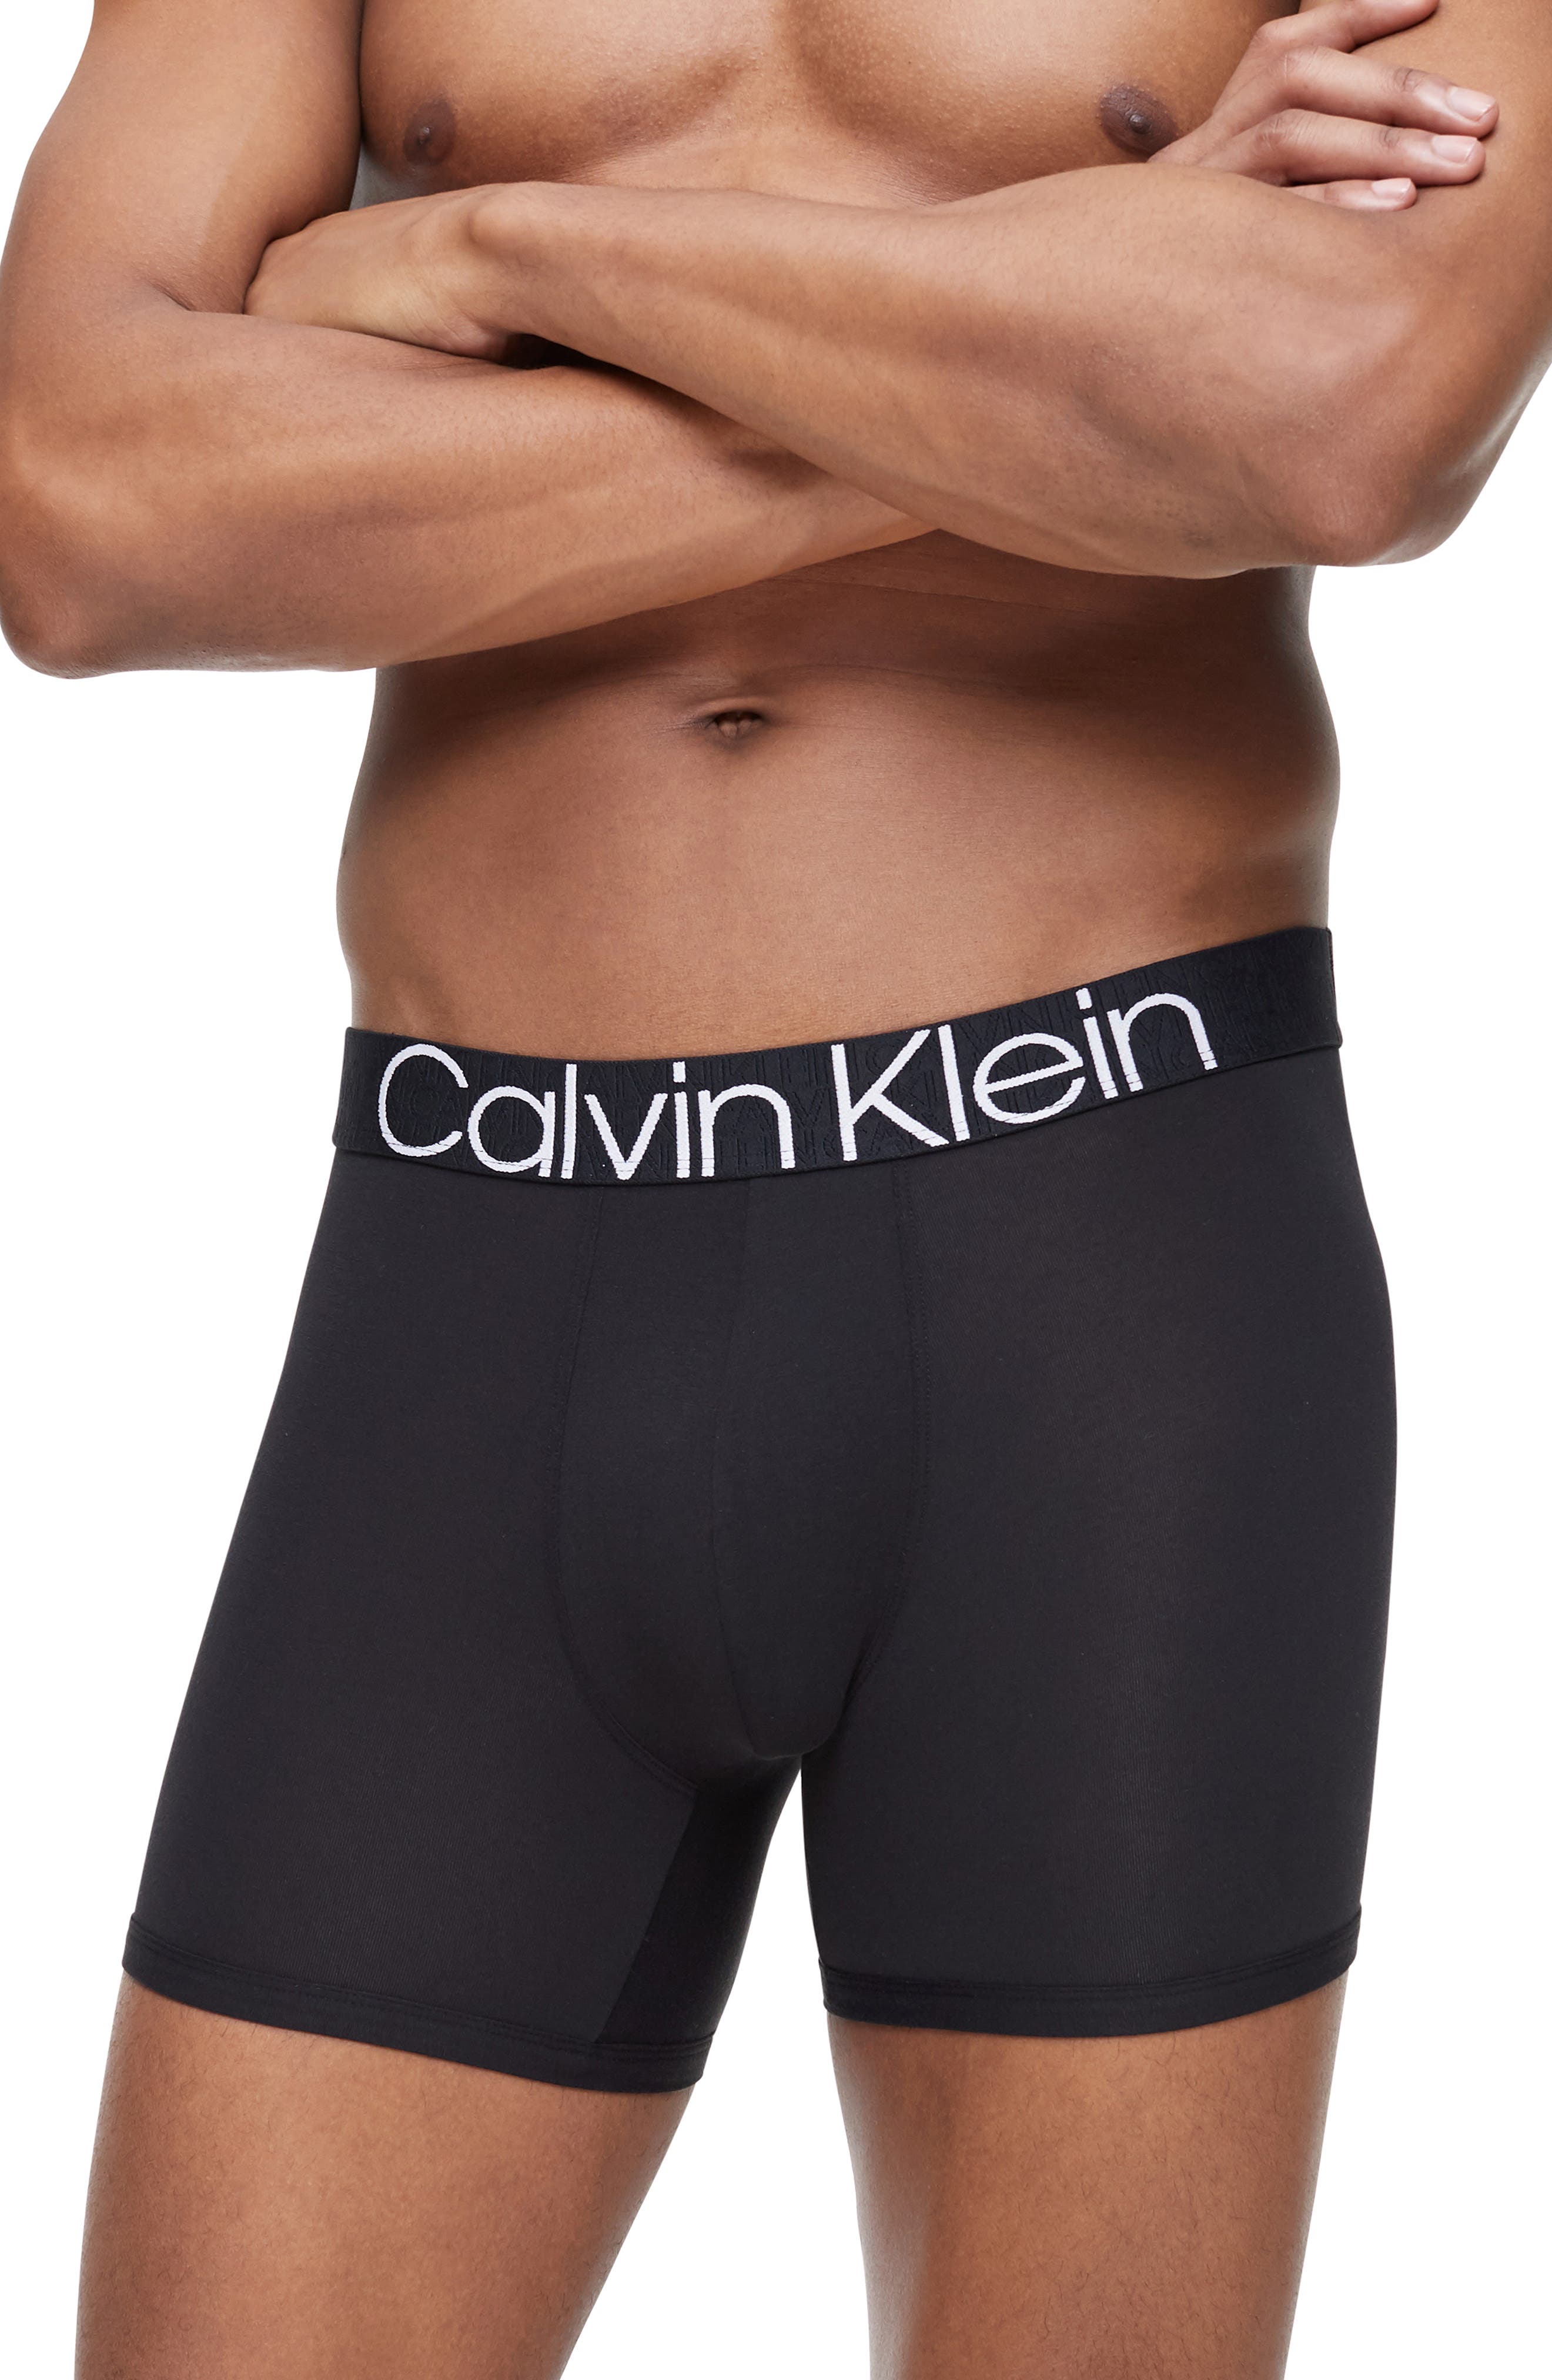 UPC 790812539347 product image for Men's Calvin Klein Eco Cotton Blend Boxer Briefs, Size Large - Black | upcitemdb.com